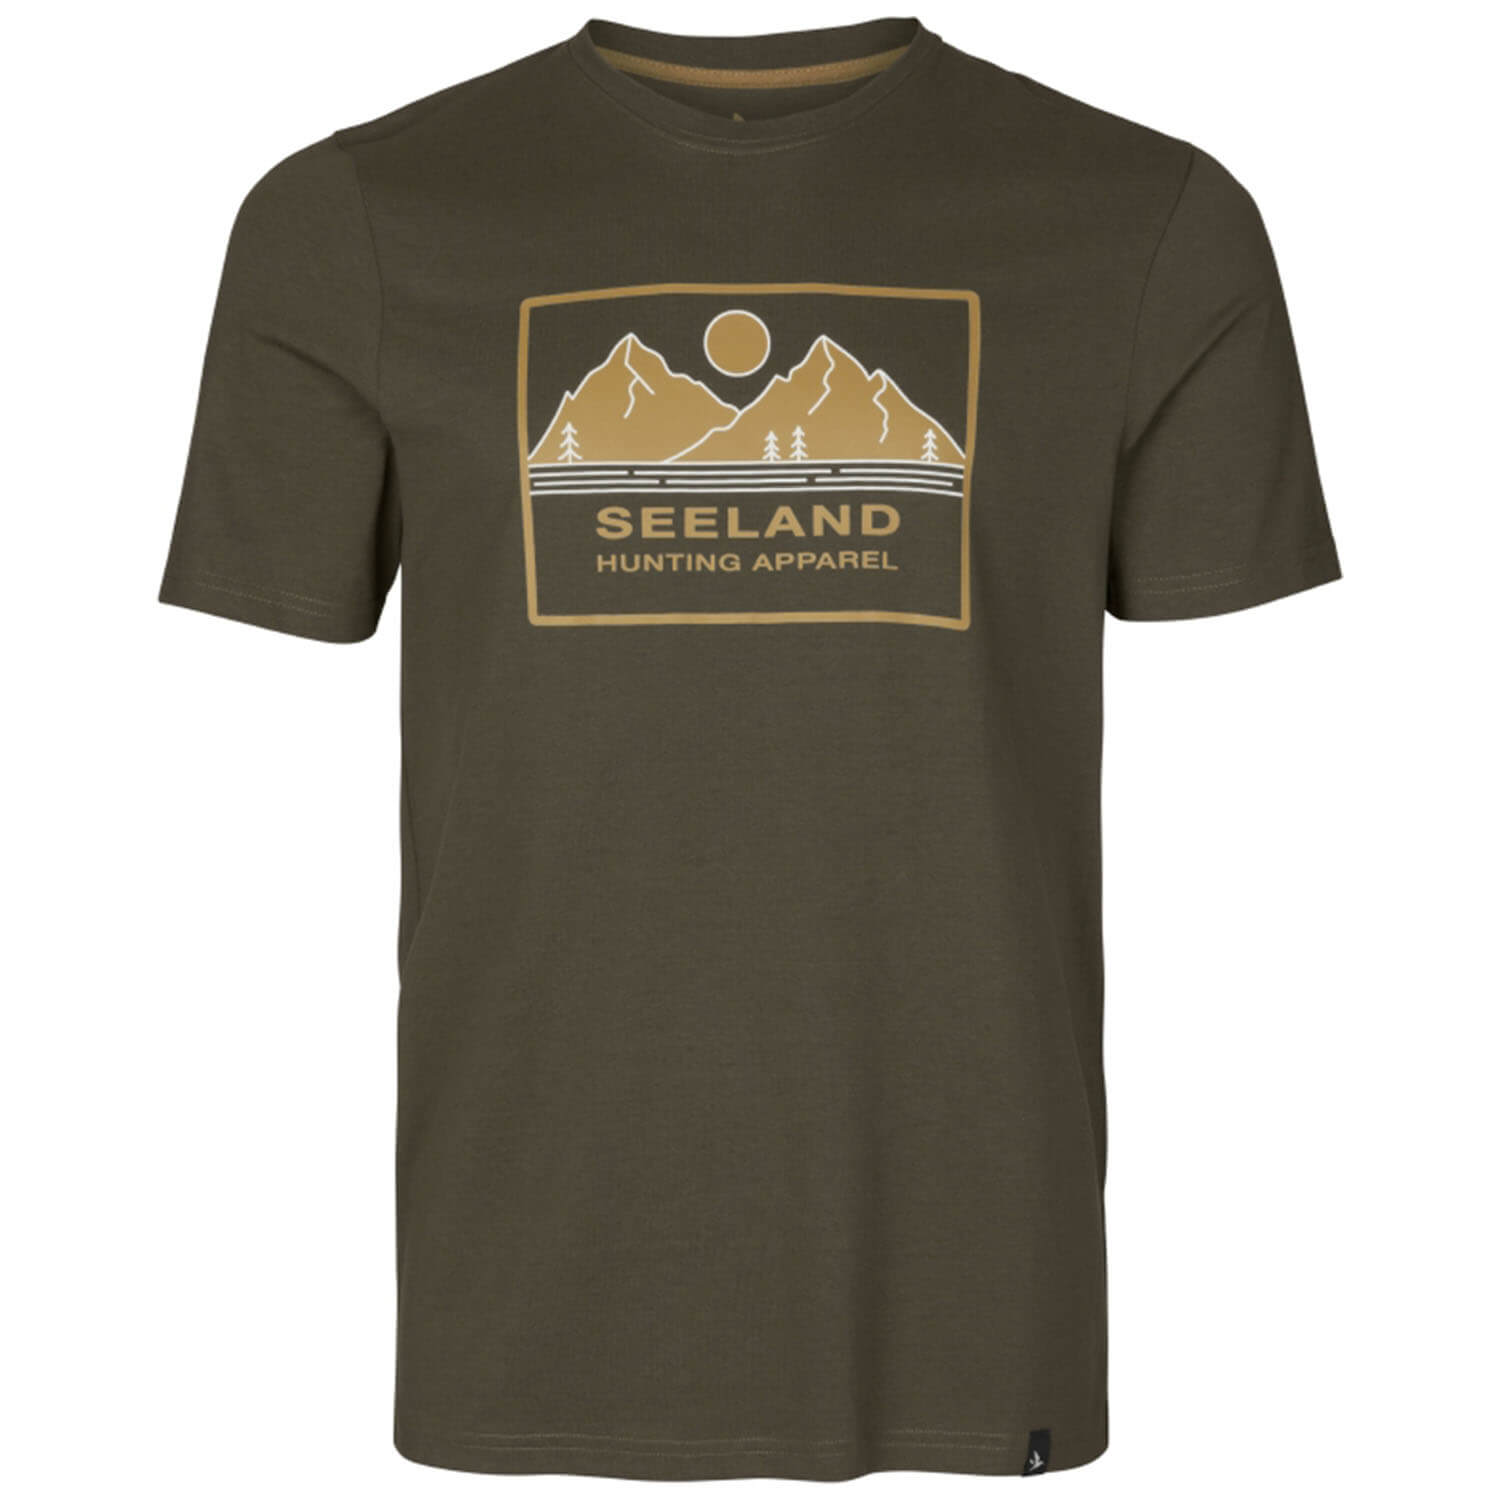  Seeland T-Shirt Torenvalk (Grizzly Bruin) - Jachtshirts